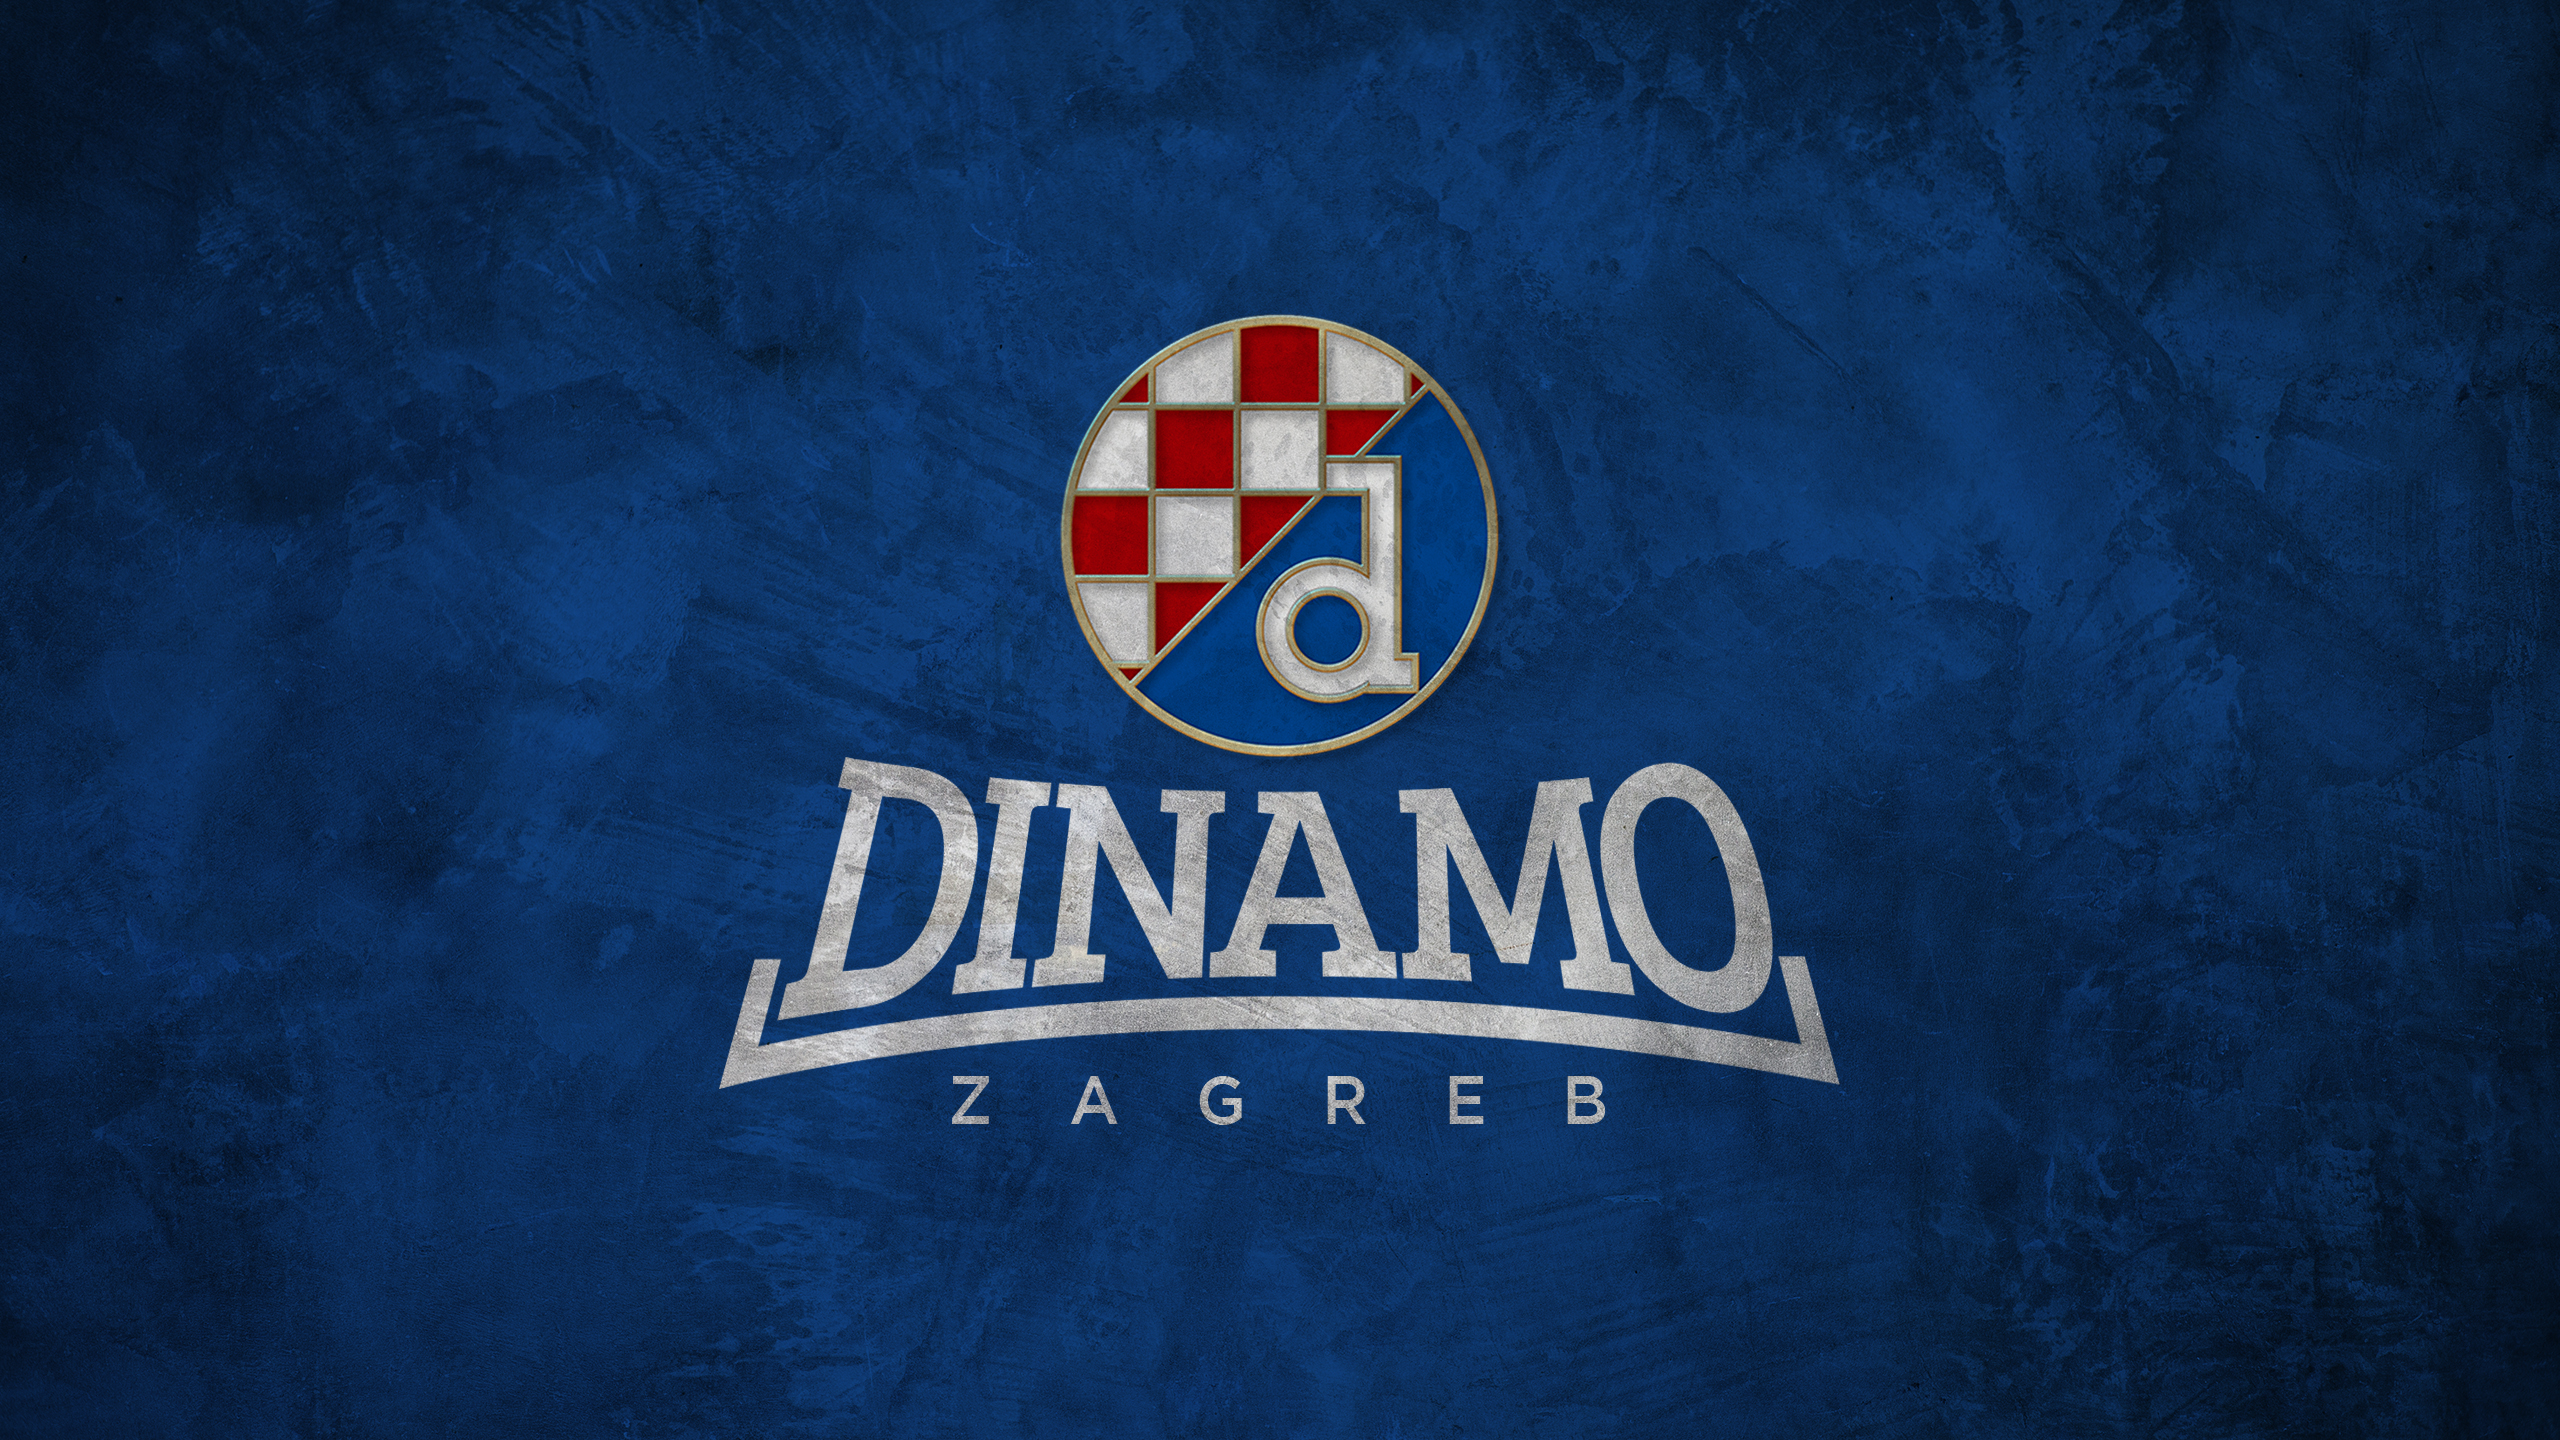 Gnk Dinamo Zagreb Wallpapers